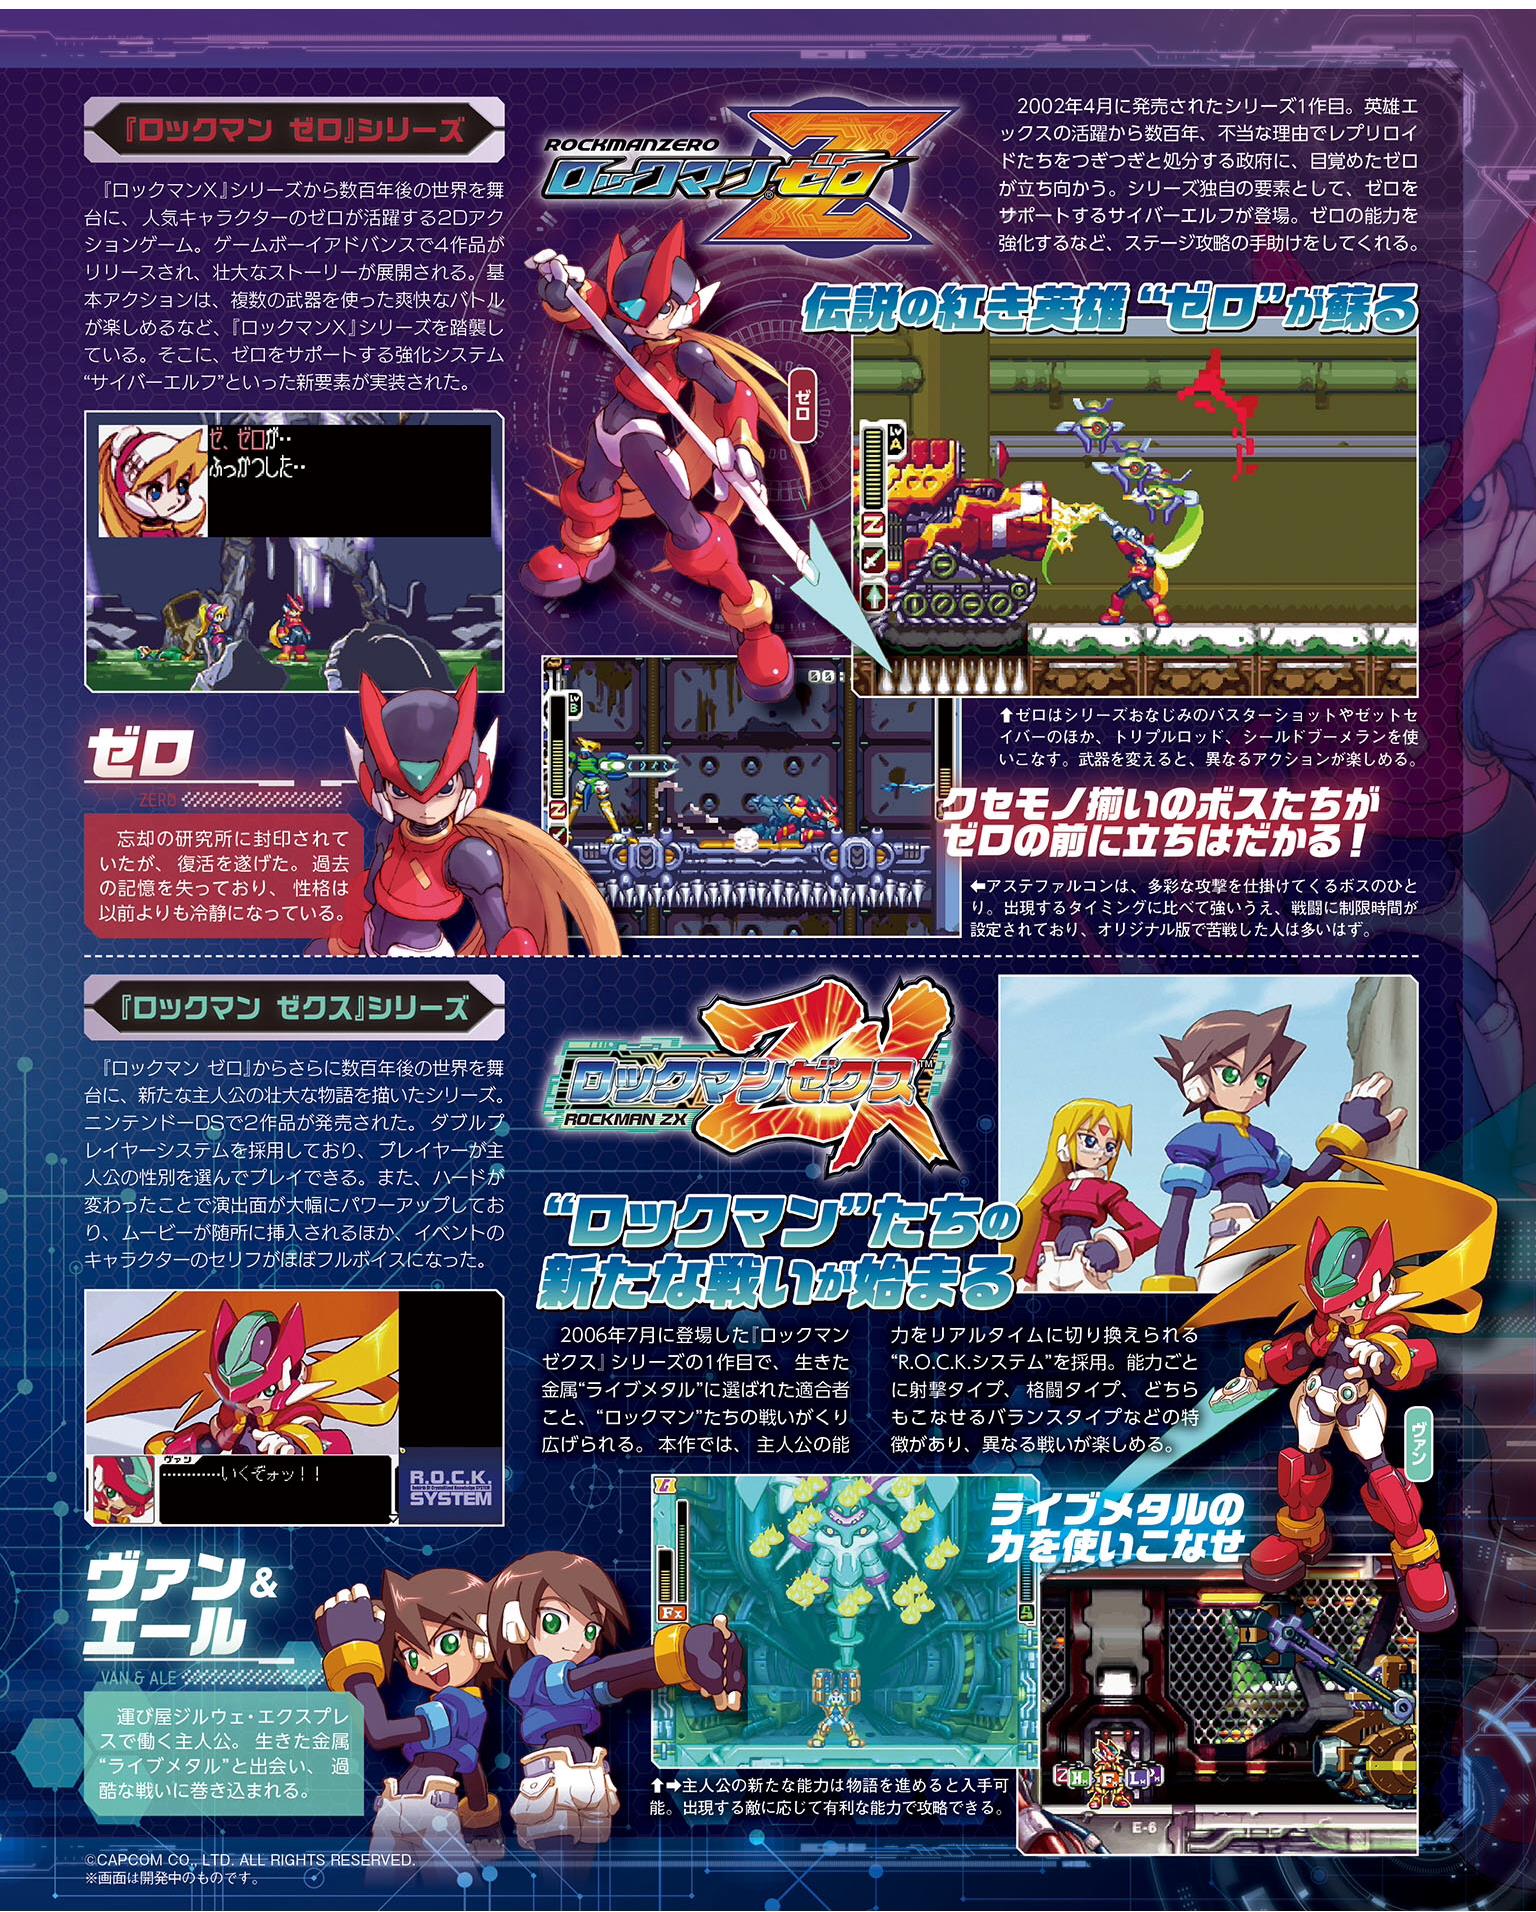 Scans roundup - Mega Man Zero/ZX Legacy Collection, Mario & Sonic 